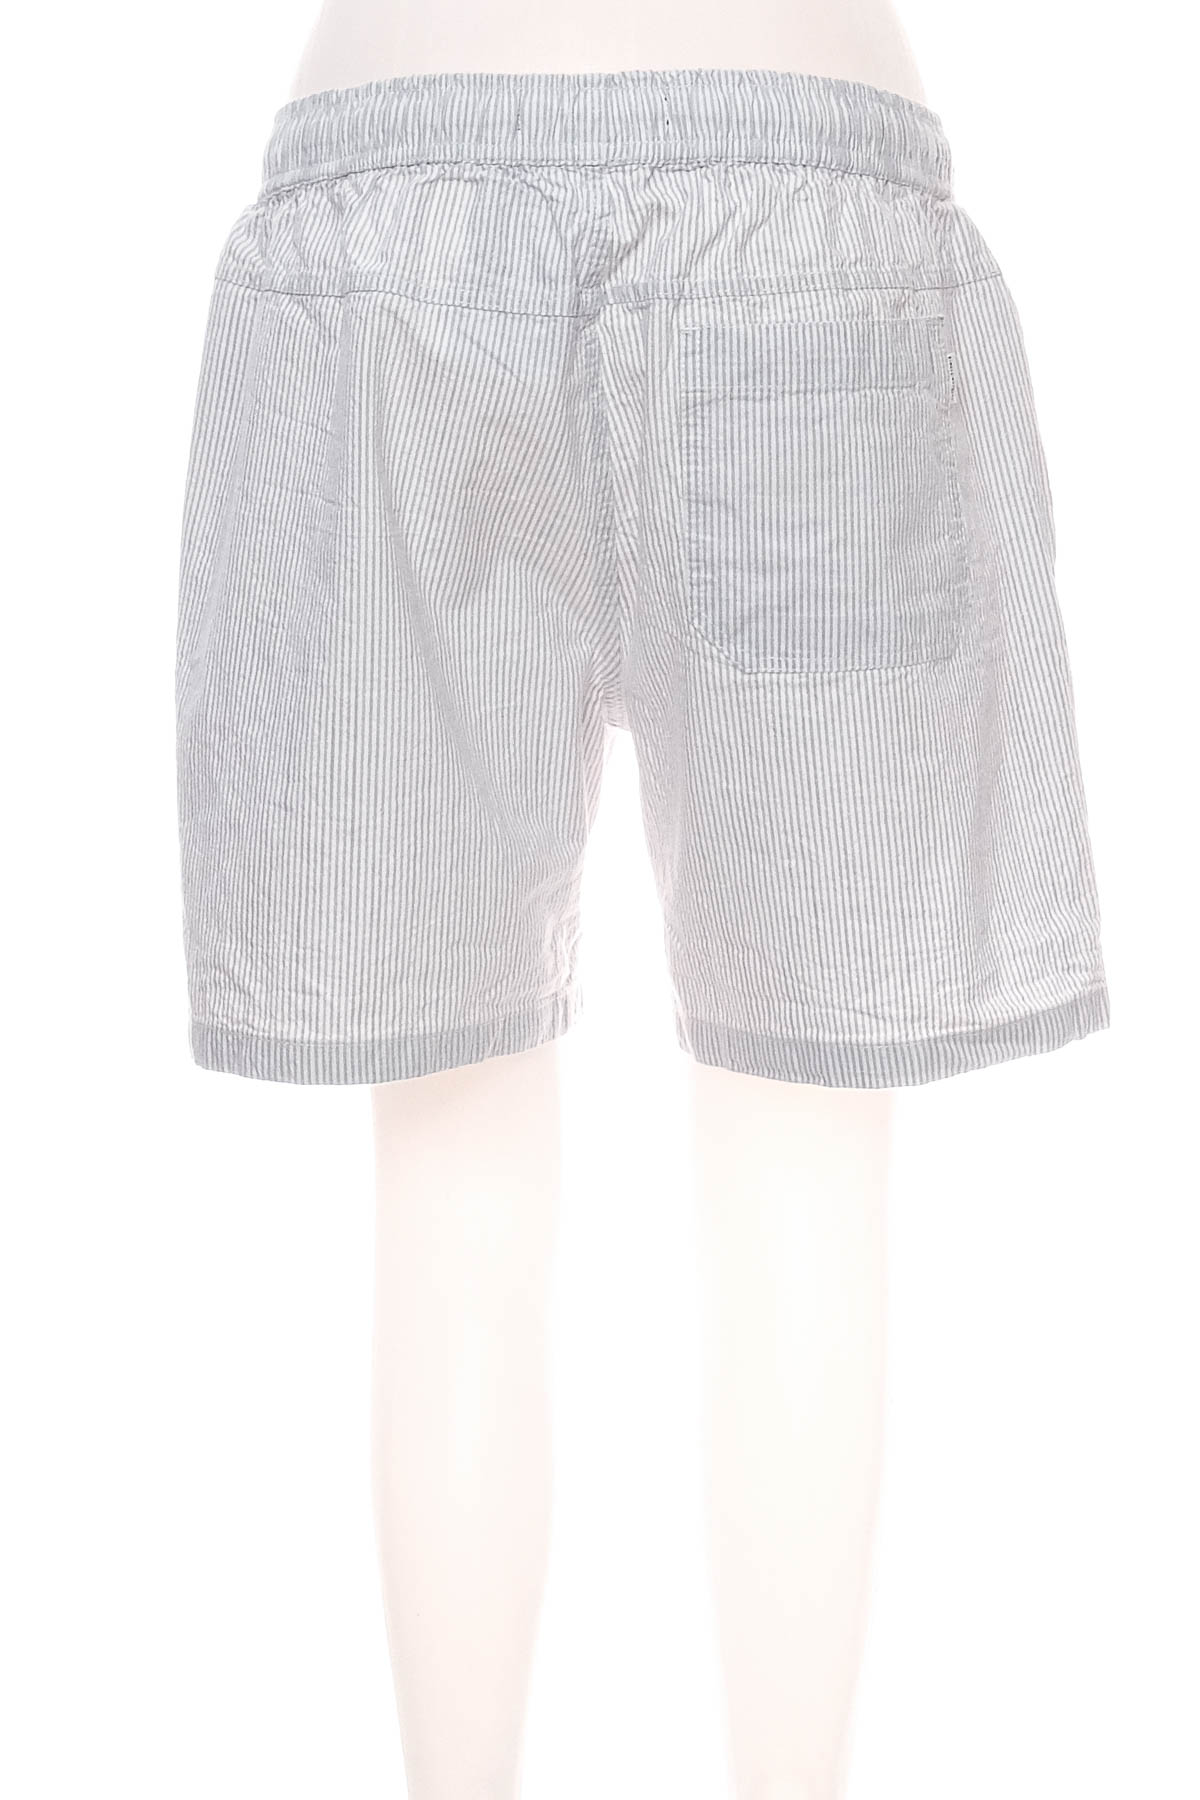 Female shorts - Cotton On Garments - 1